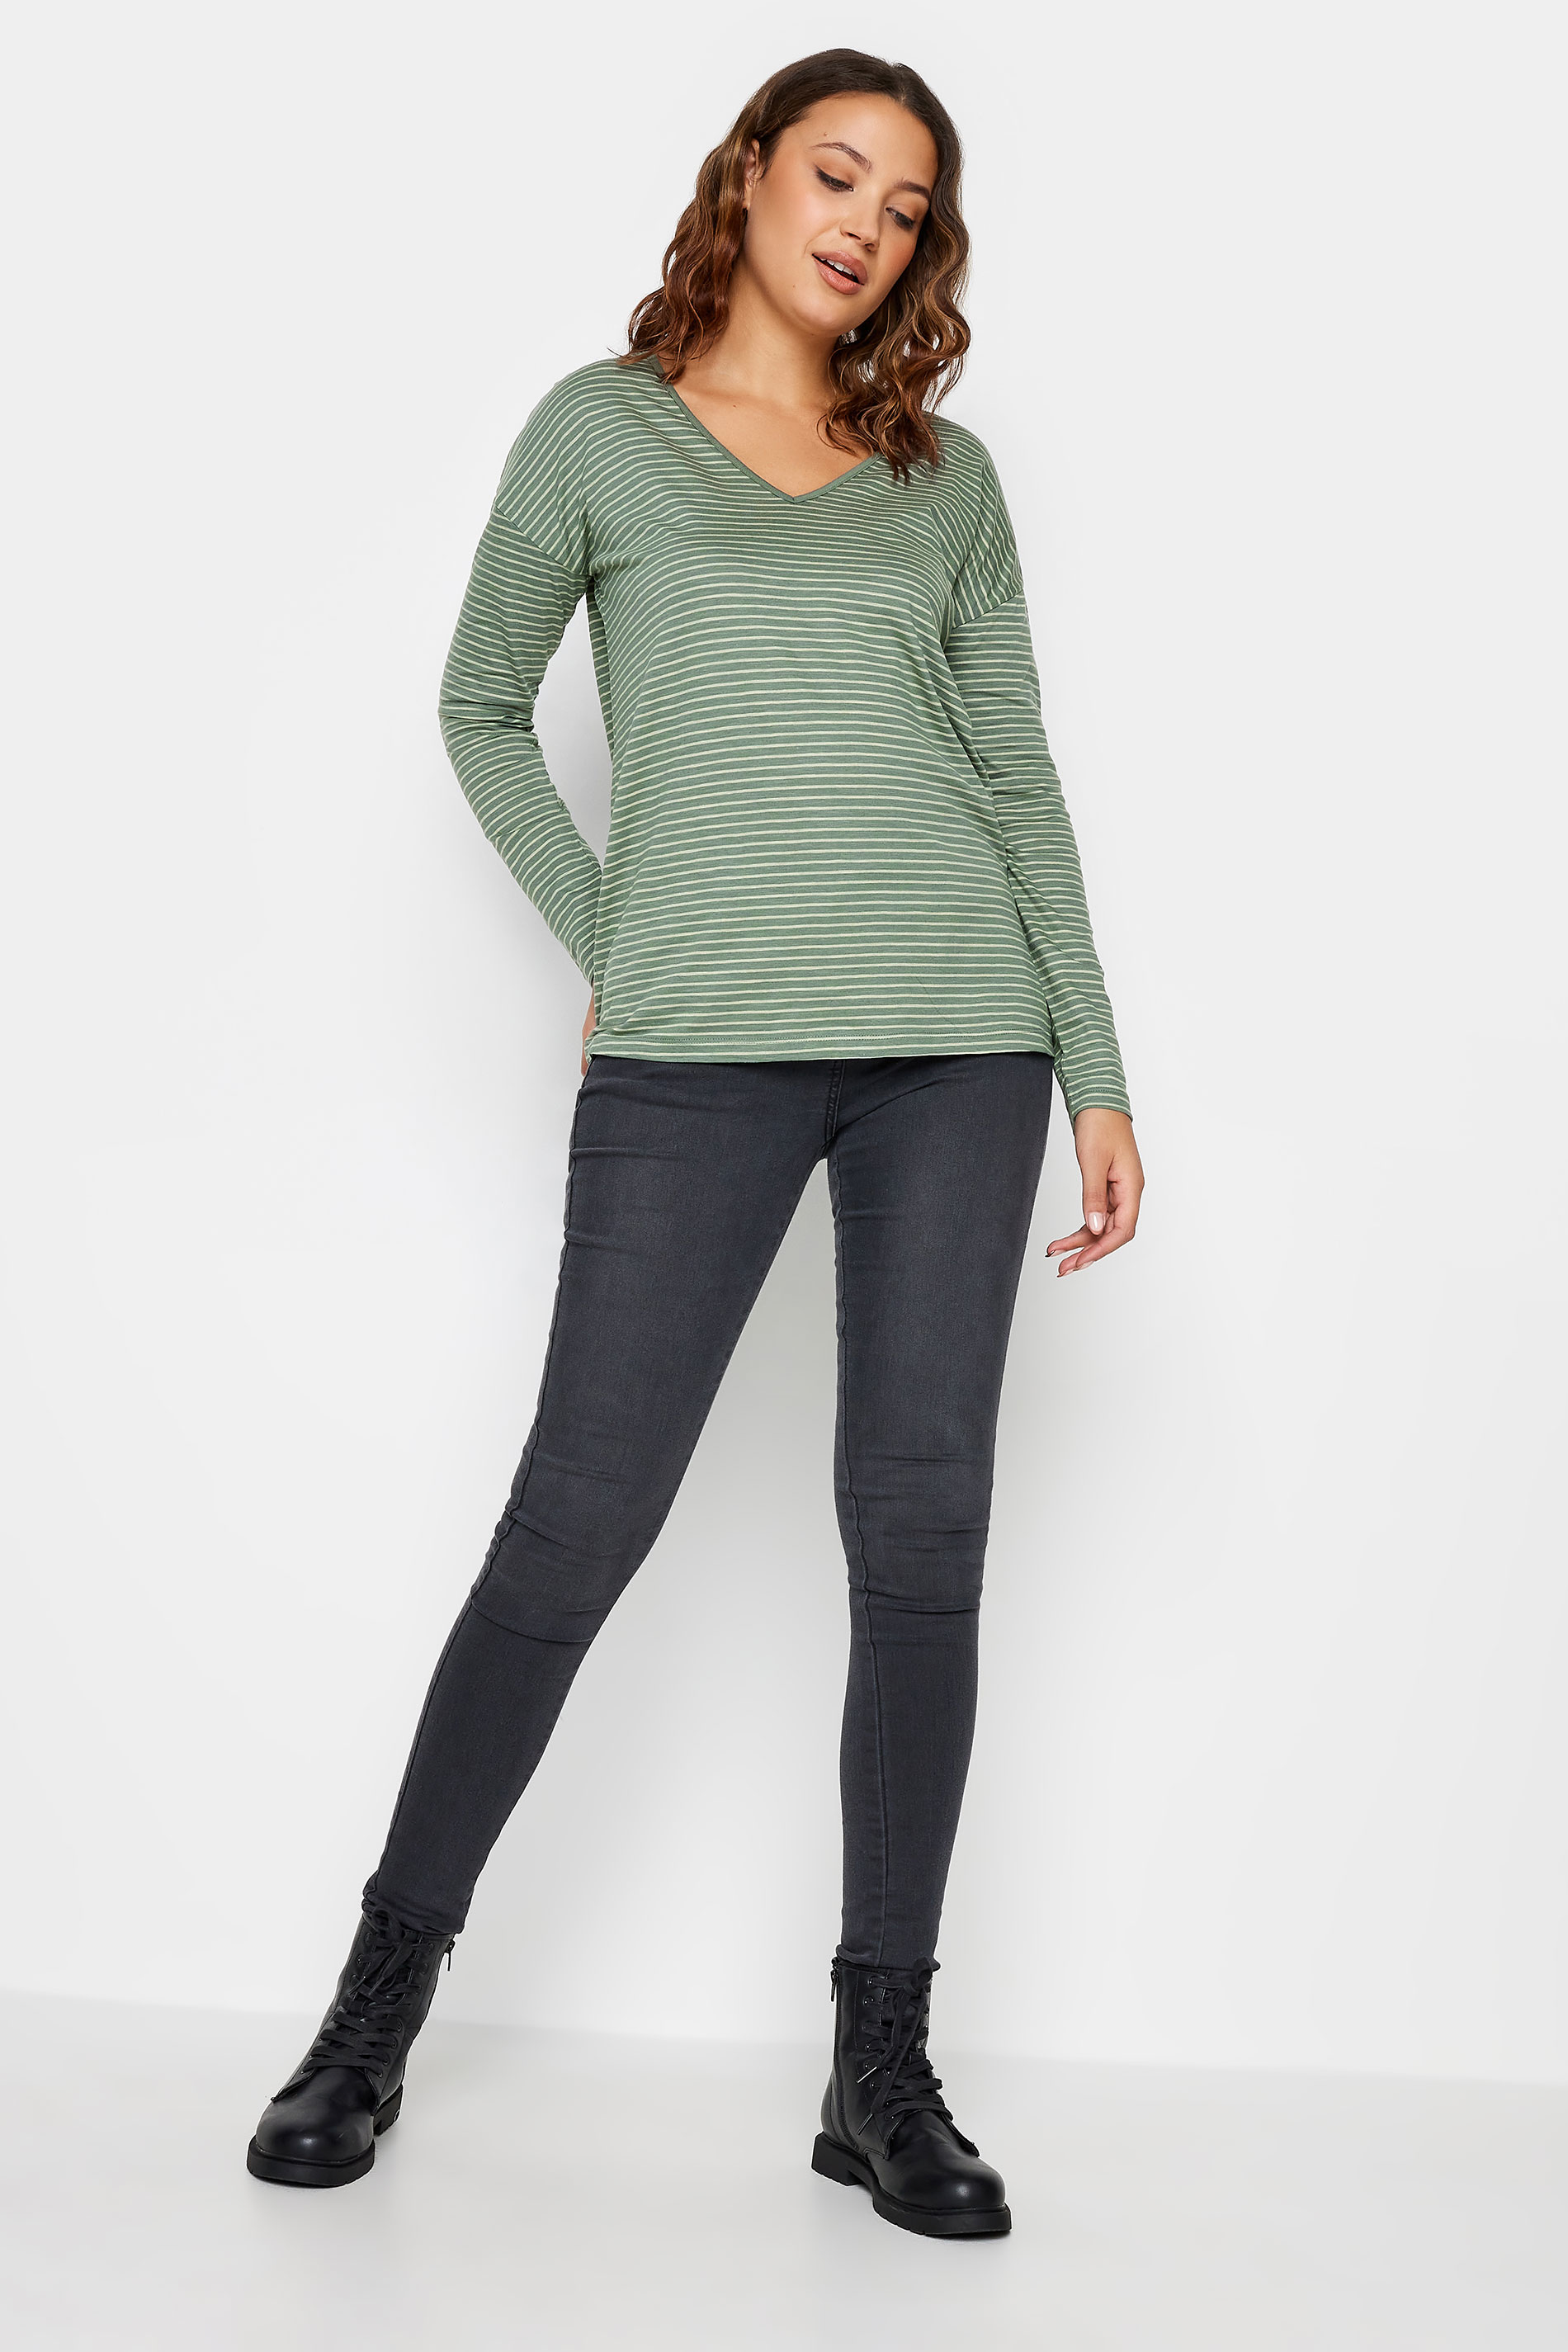 LTS Tall Sage Green V-Neck Long Sleeve Cotton T-Shirt | Long Tall Sally 2